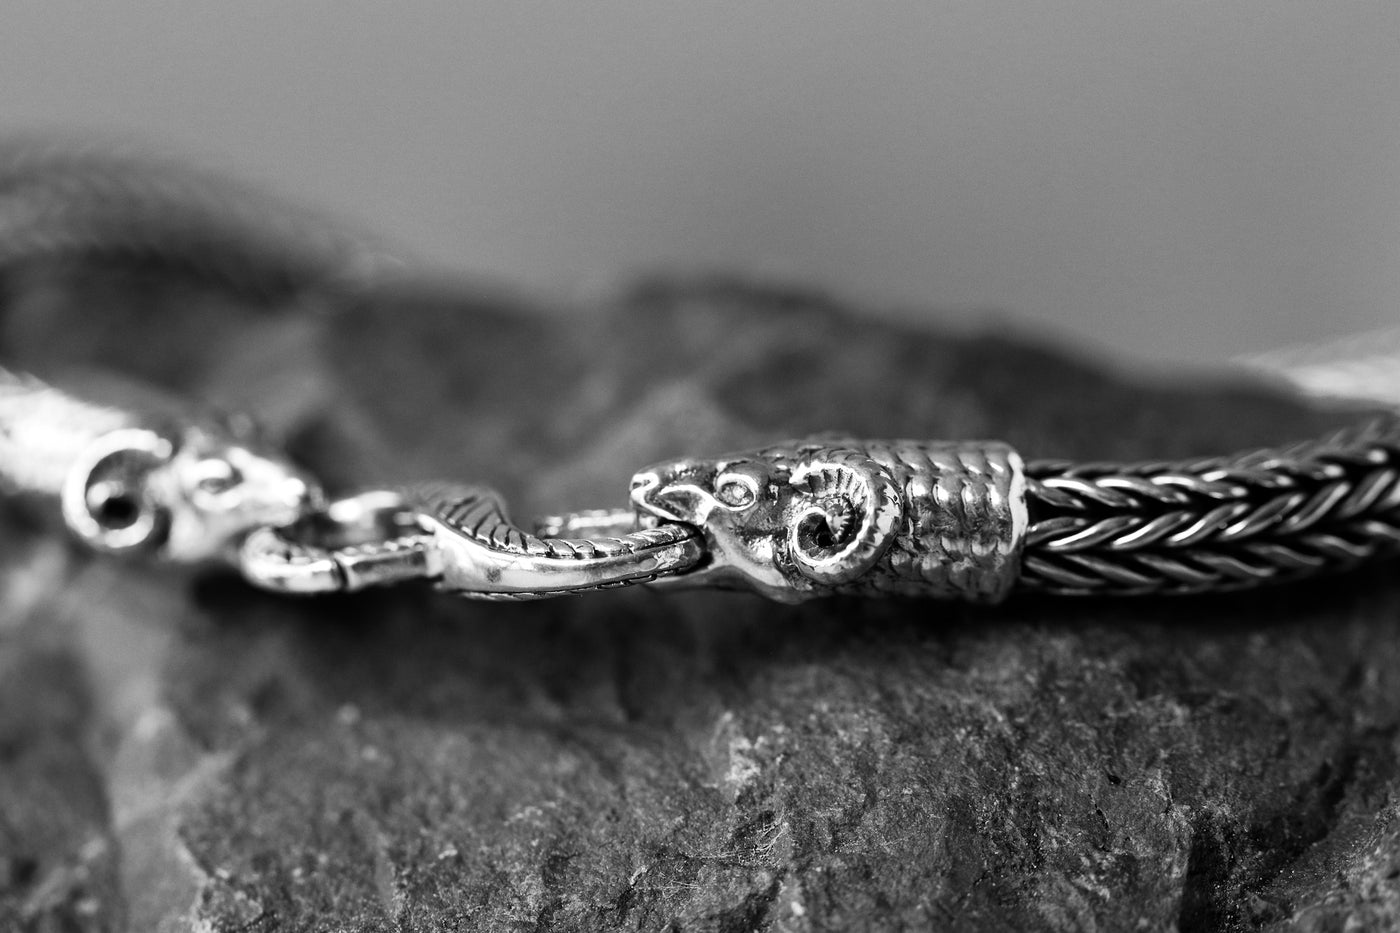 Ram Silver Necklace